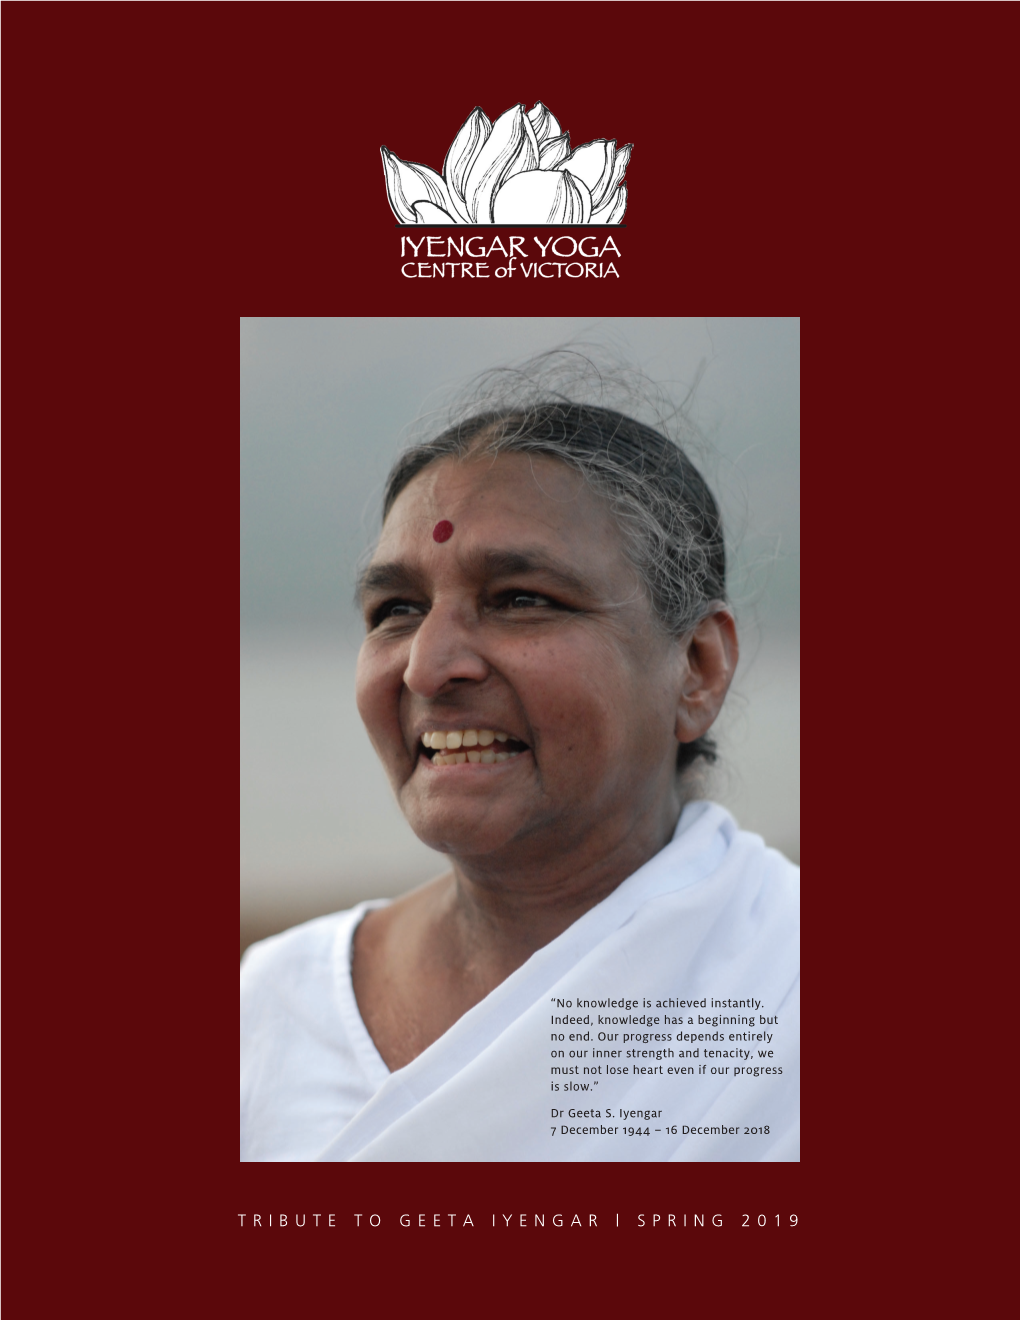 Geeta Iyengar | SPRING 2019 in Gratitude for the Life of Geeta S